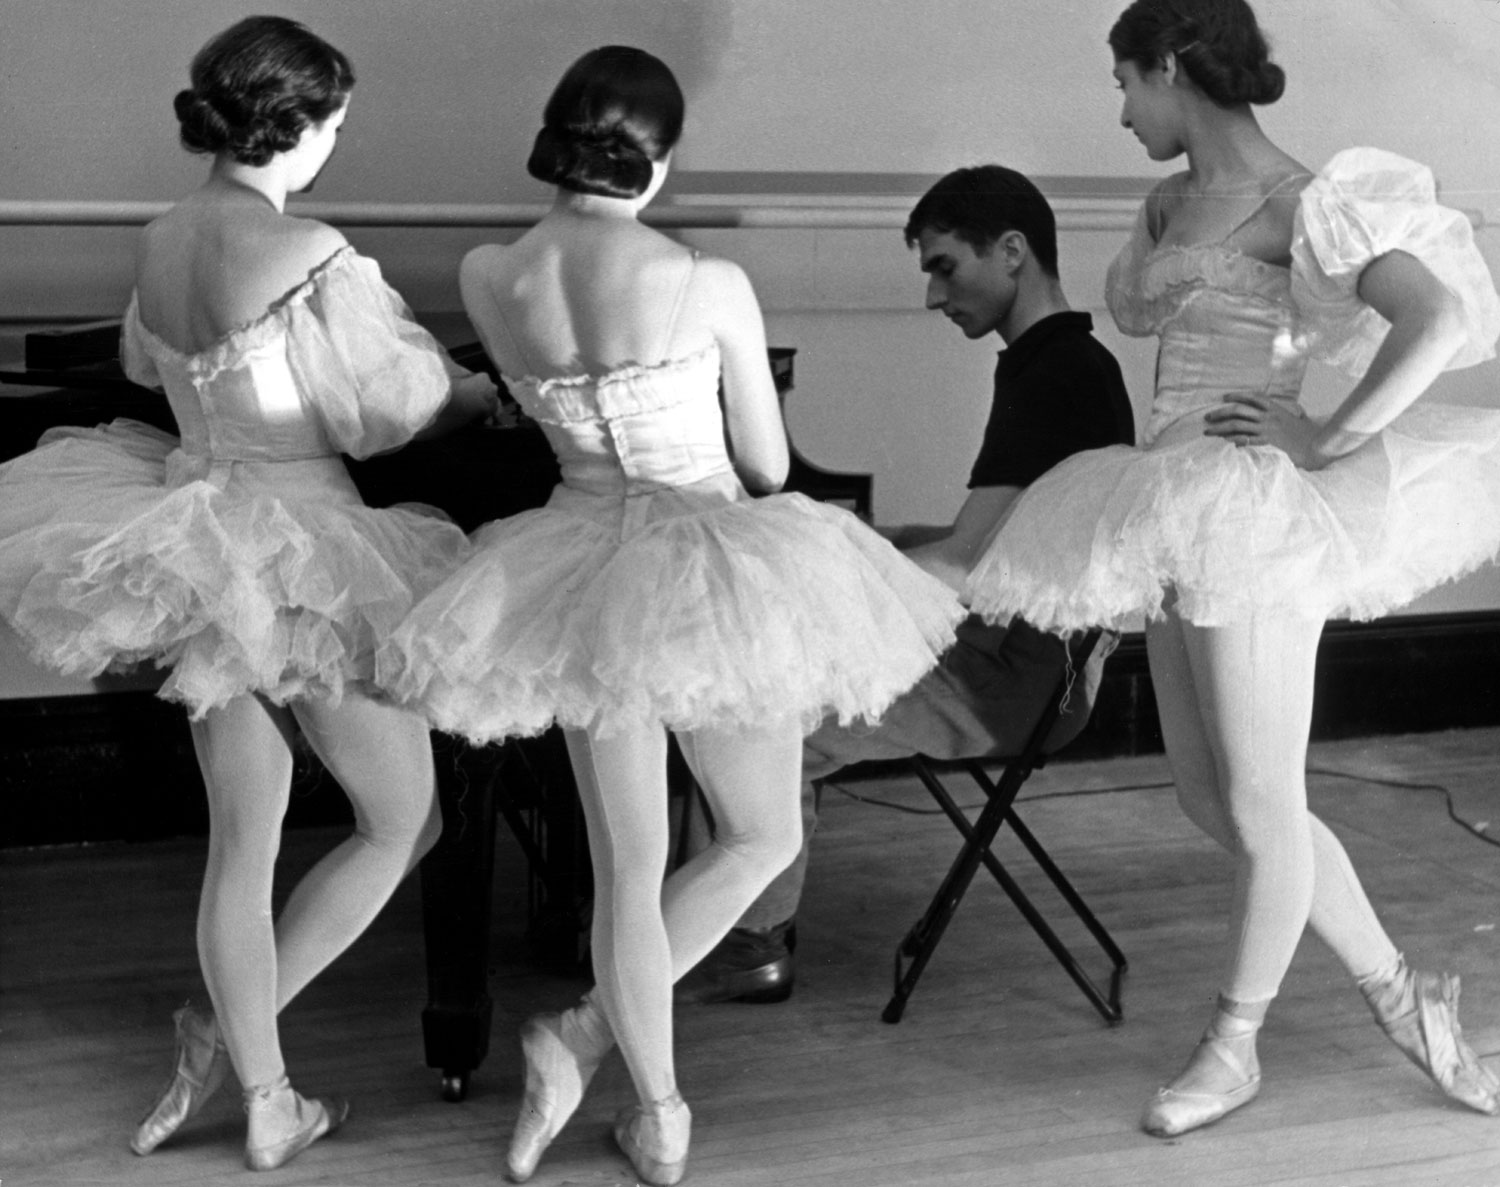 School of the American Ballet, New York, 1936